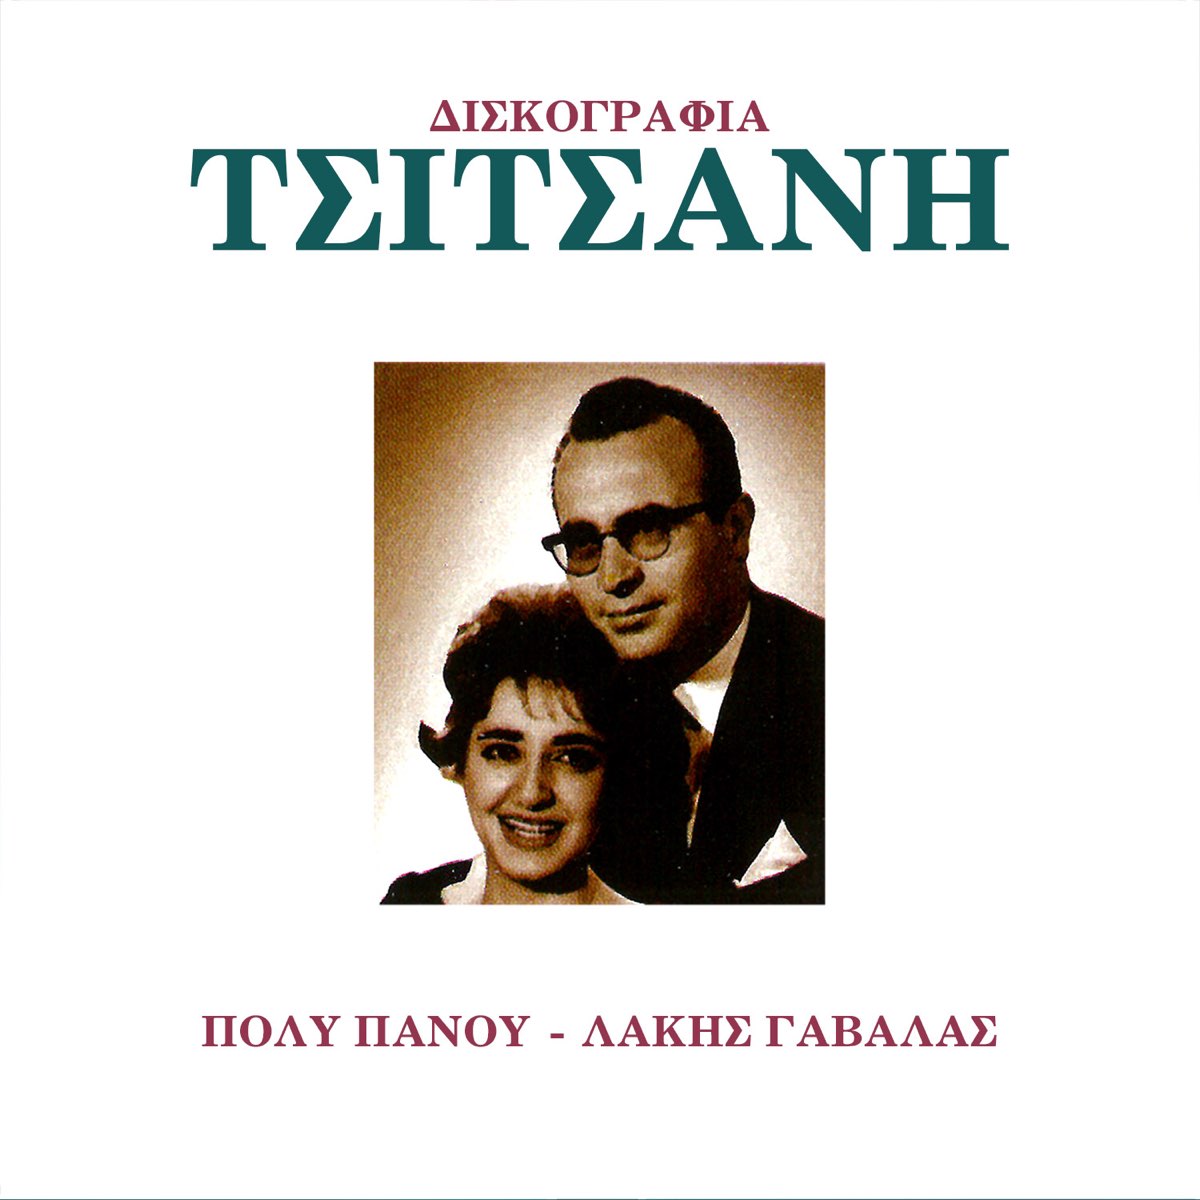 Diskografia Tsitsani, Vol. 8 by Póli Pánou & Panos Gavalas on Apple Music